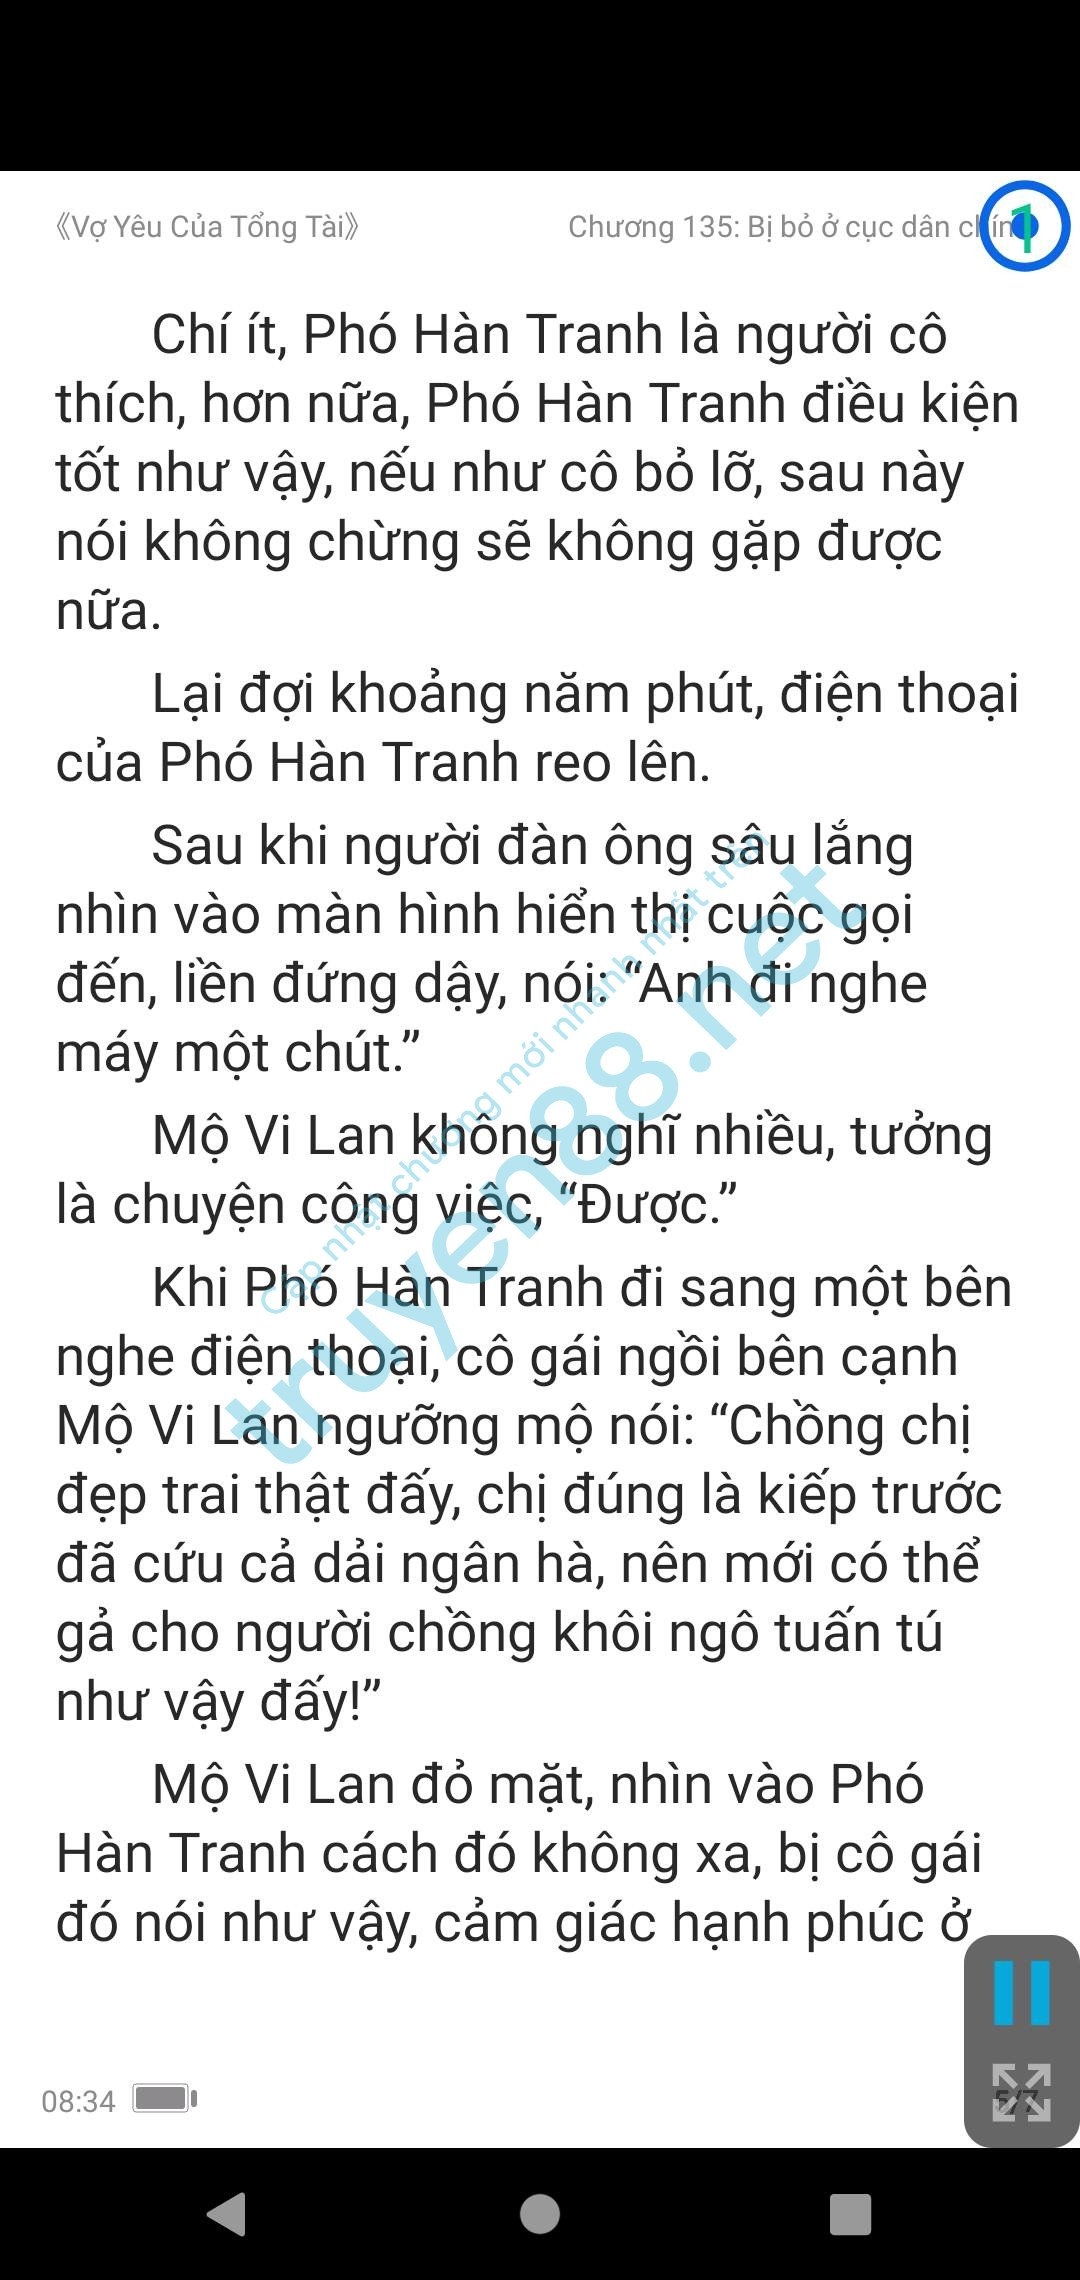 vo-yeu-cua-tong-tai-mo-vi-lan--pho-han-tranh-135-1